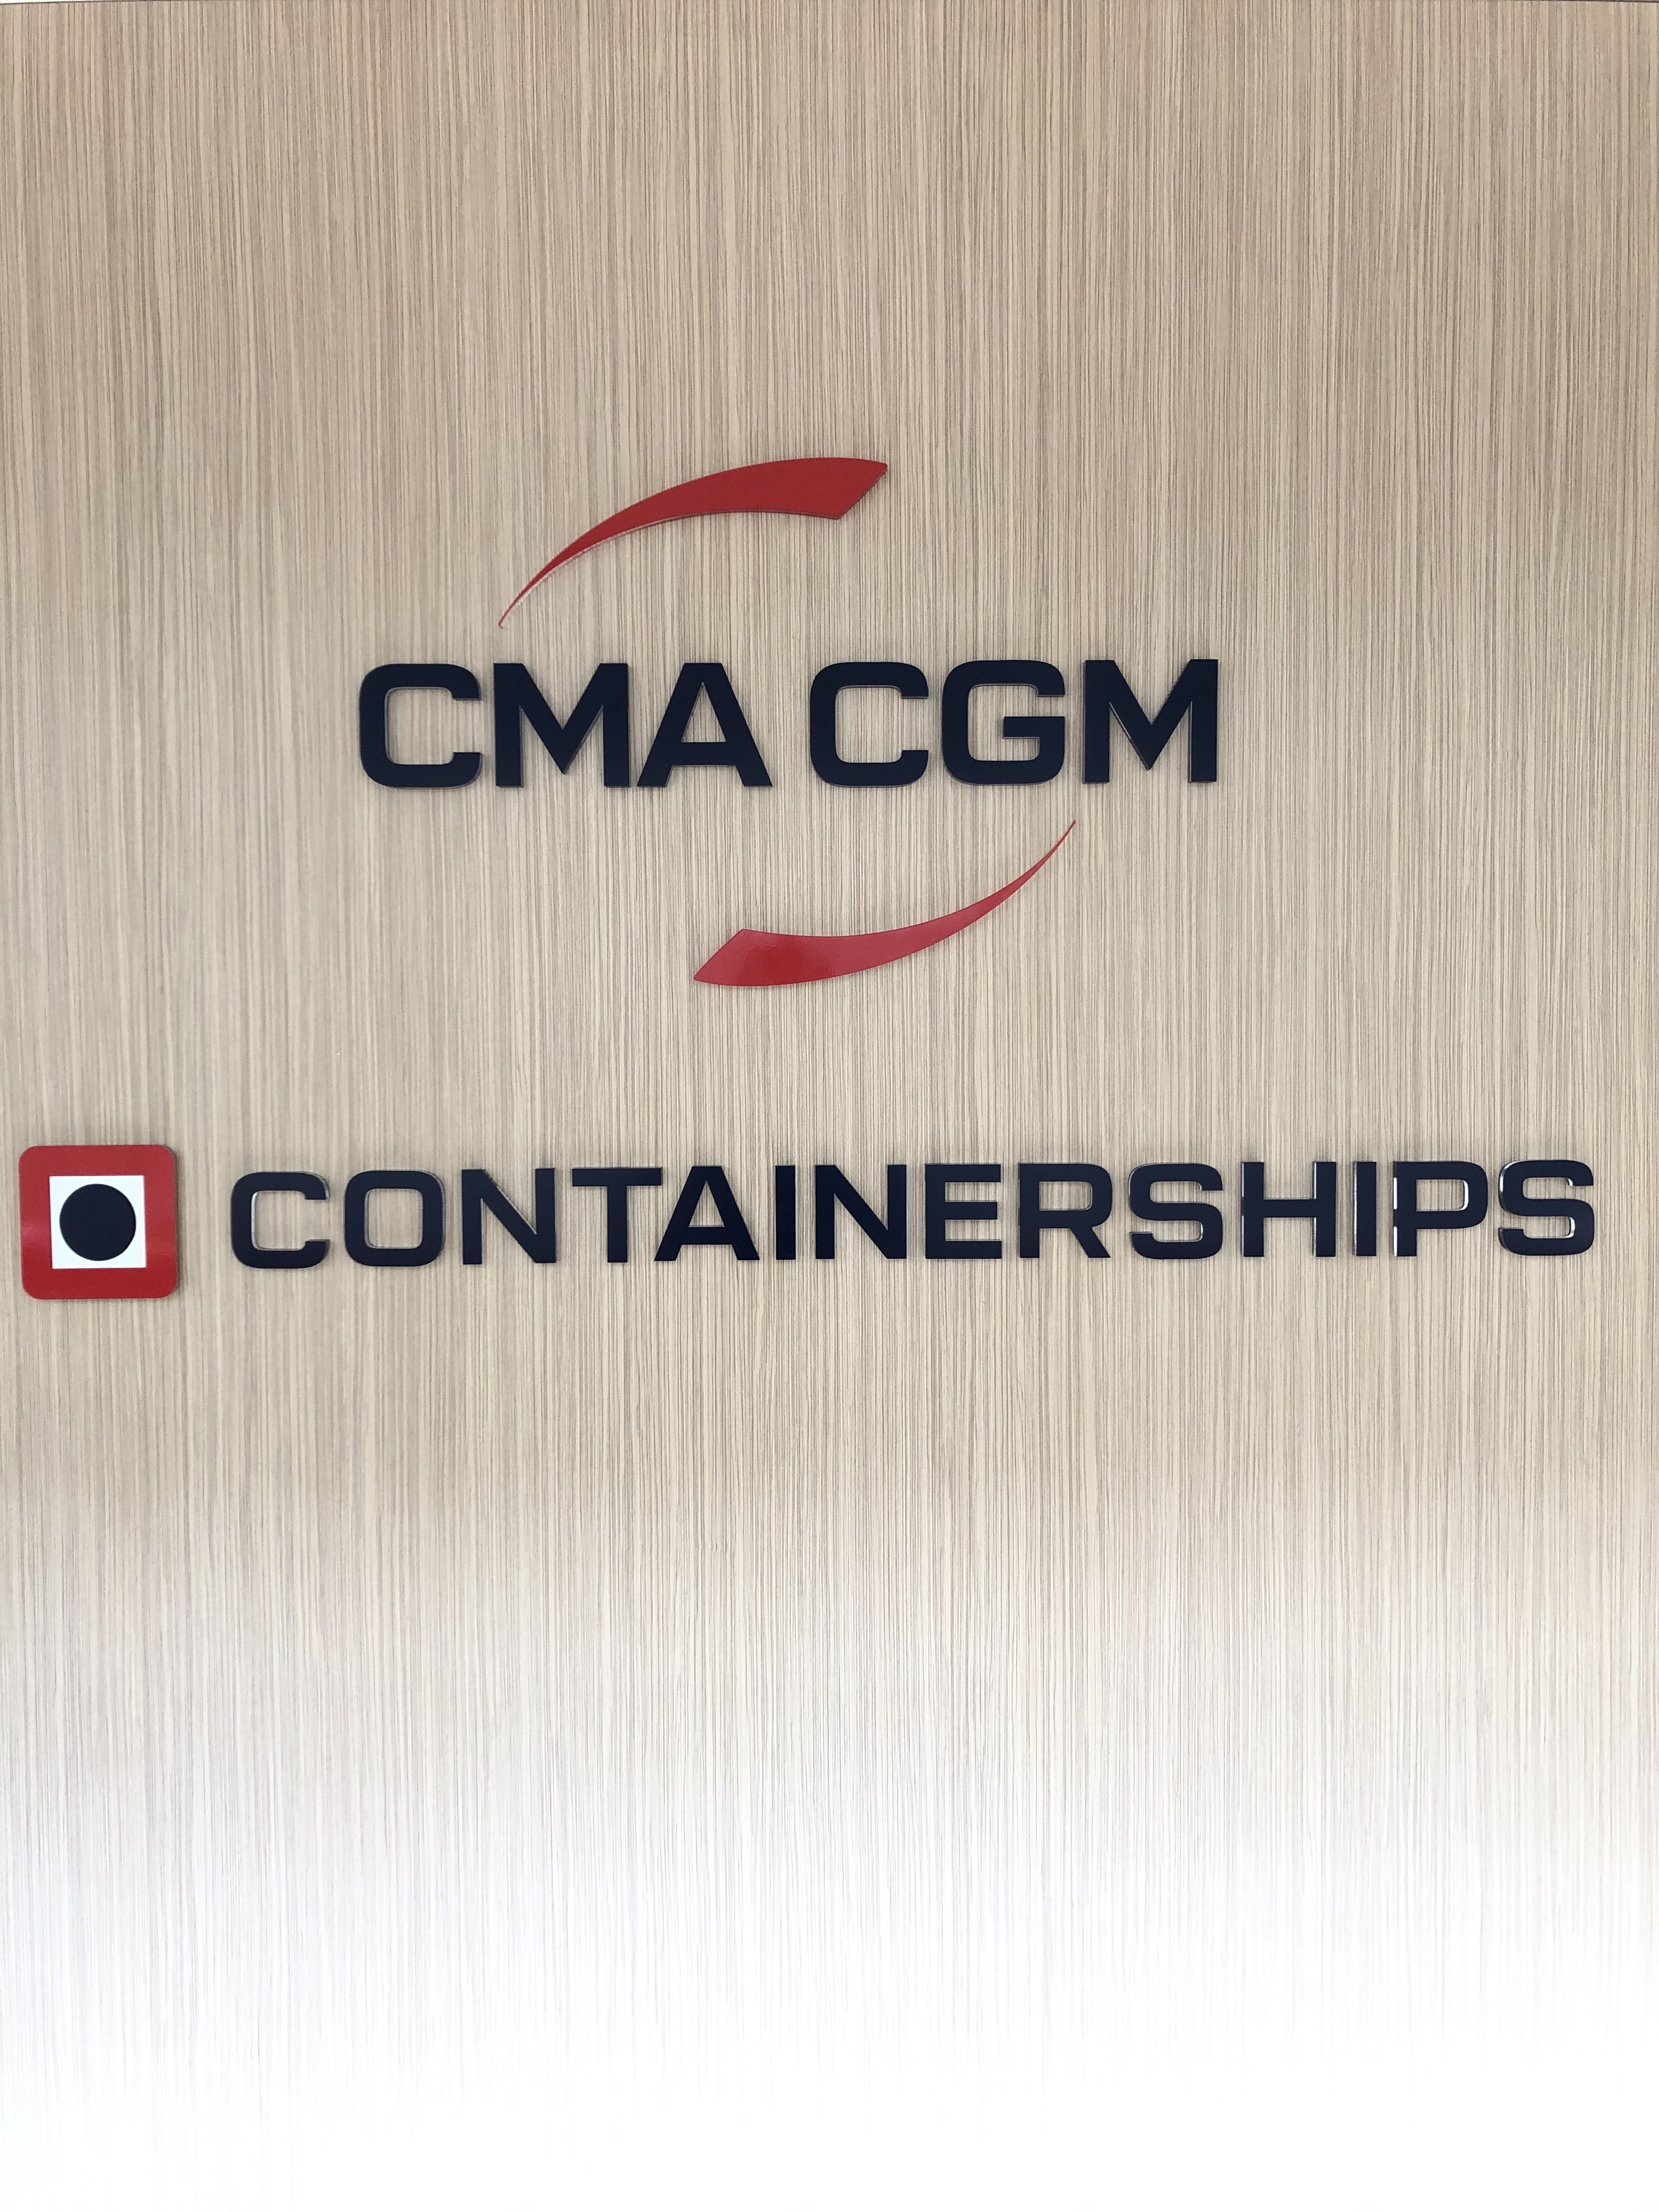 CMA CGM plastic sign